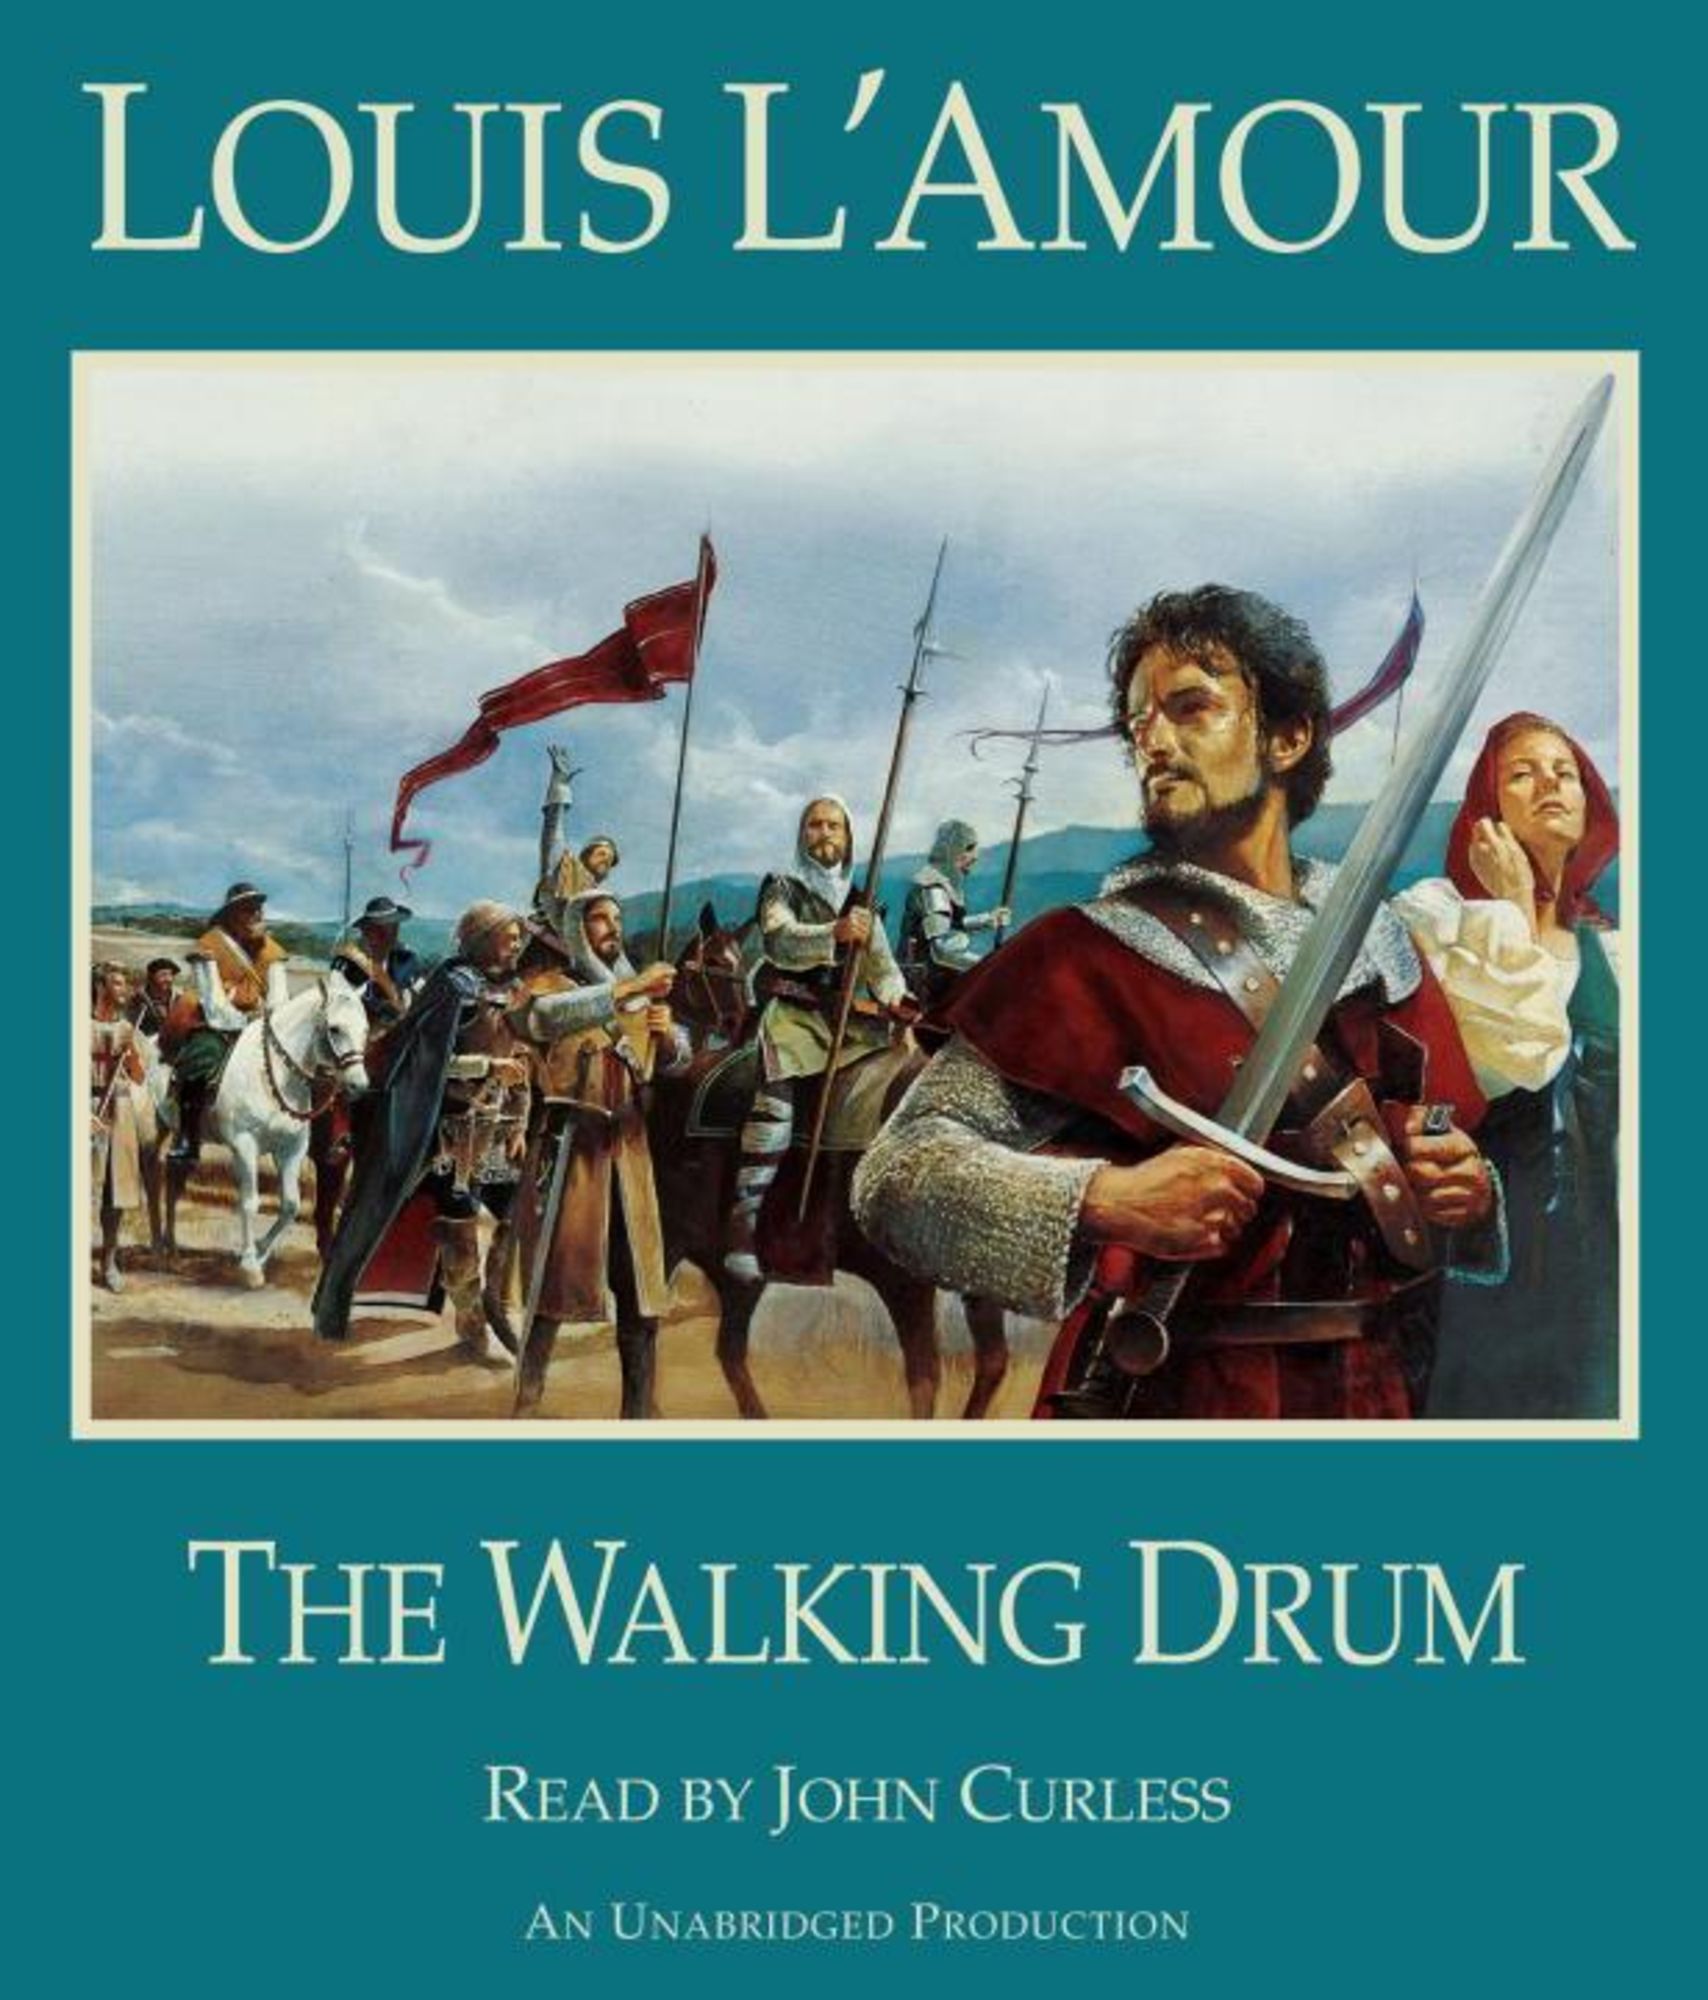 Callaghen (Louis L'Amour's Lost Treasures) eBook by Louis L'Amour - EPUB  Book